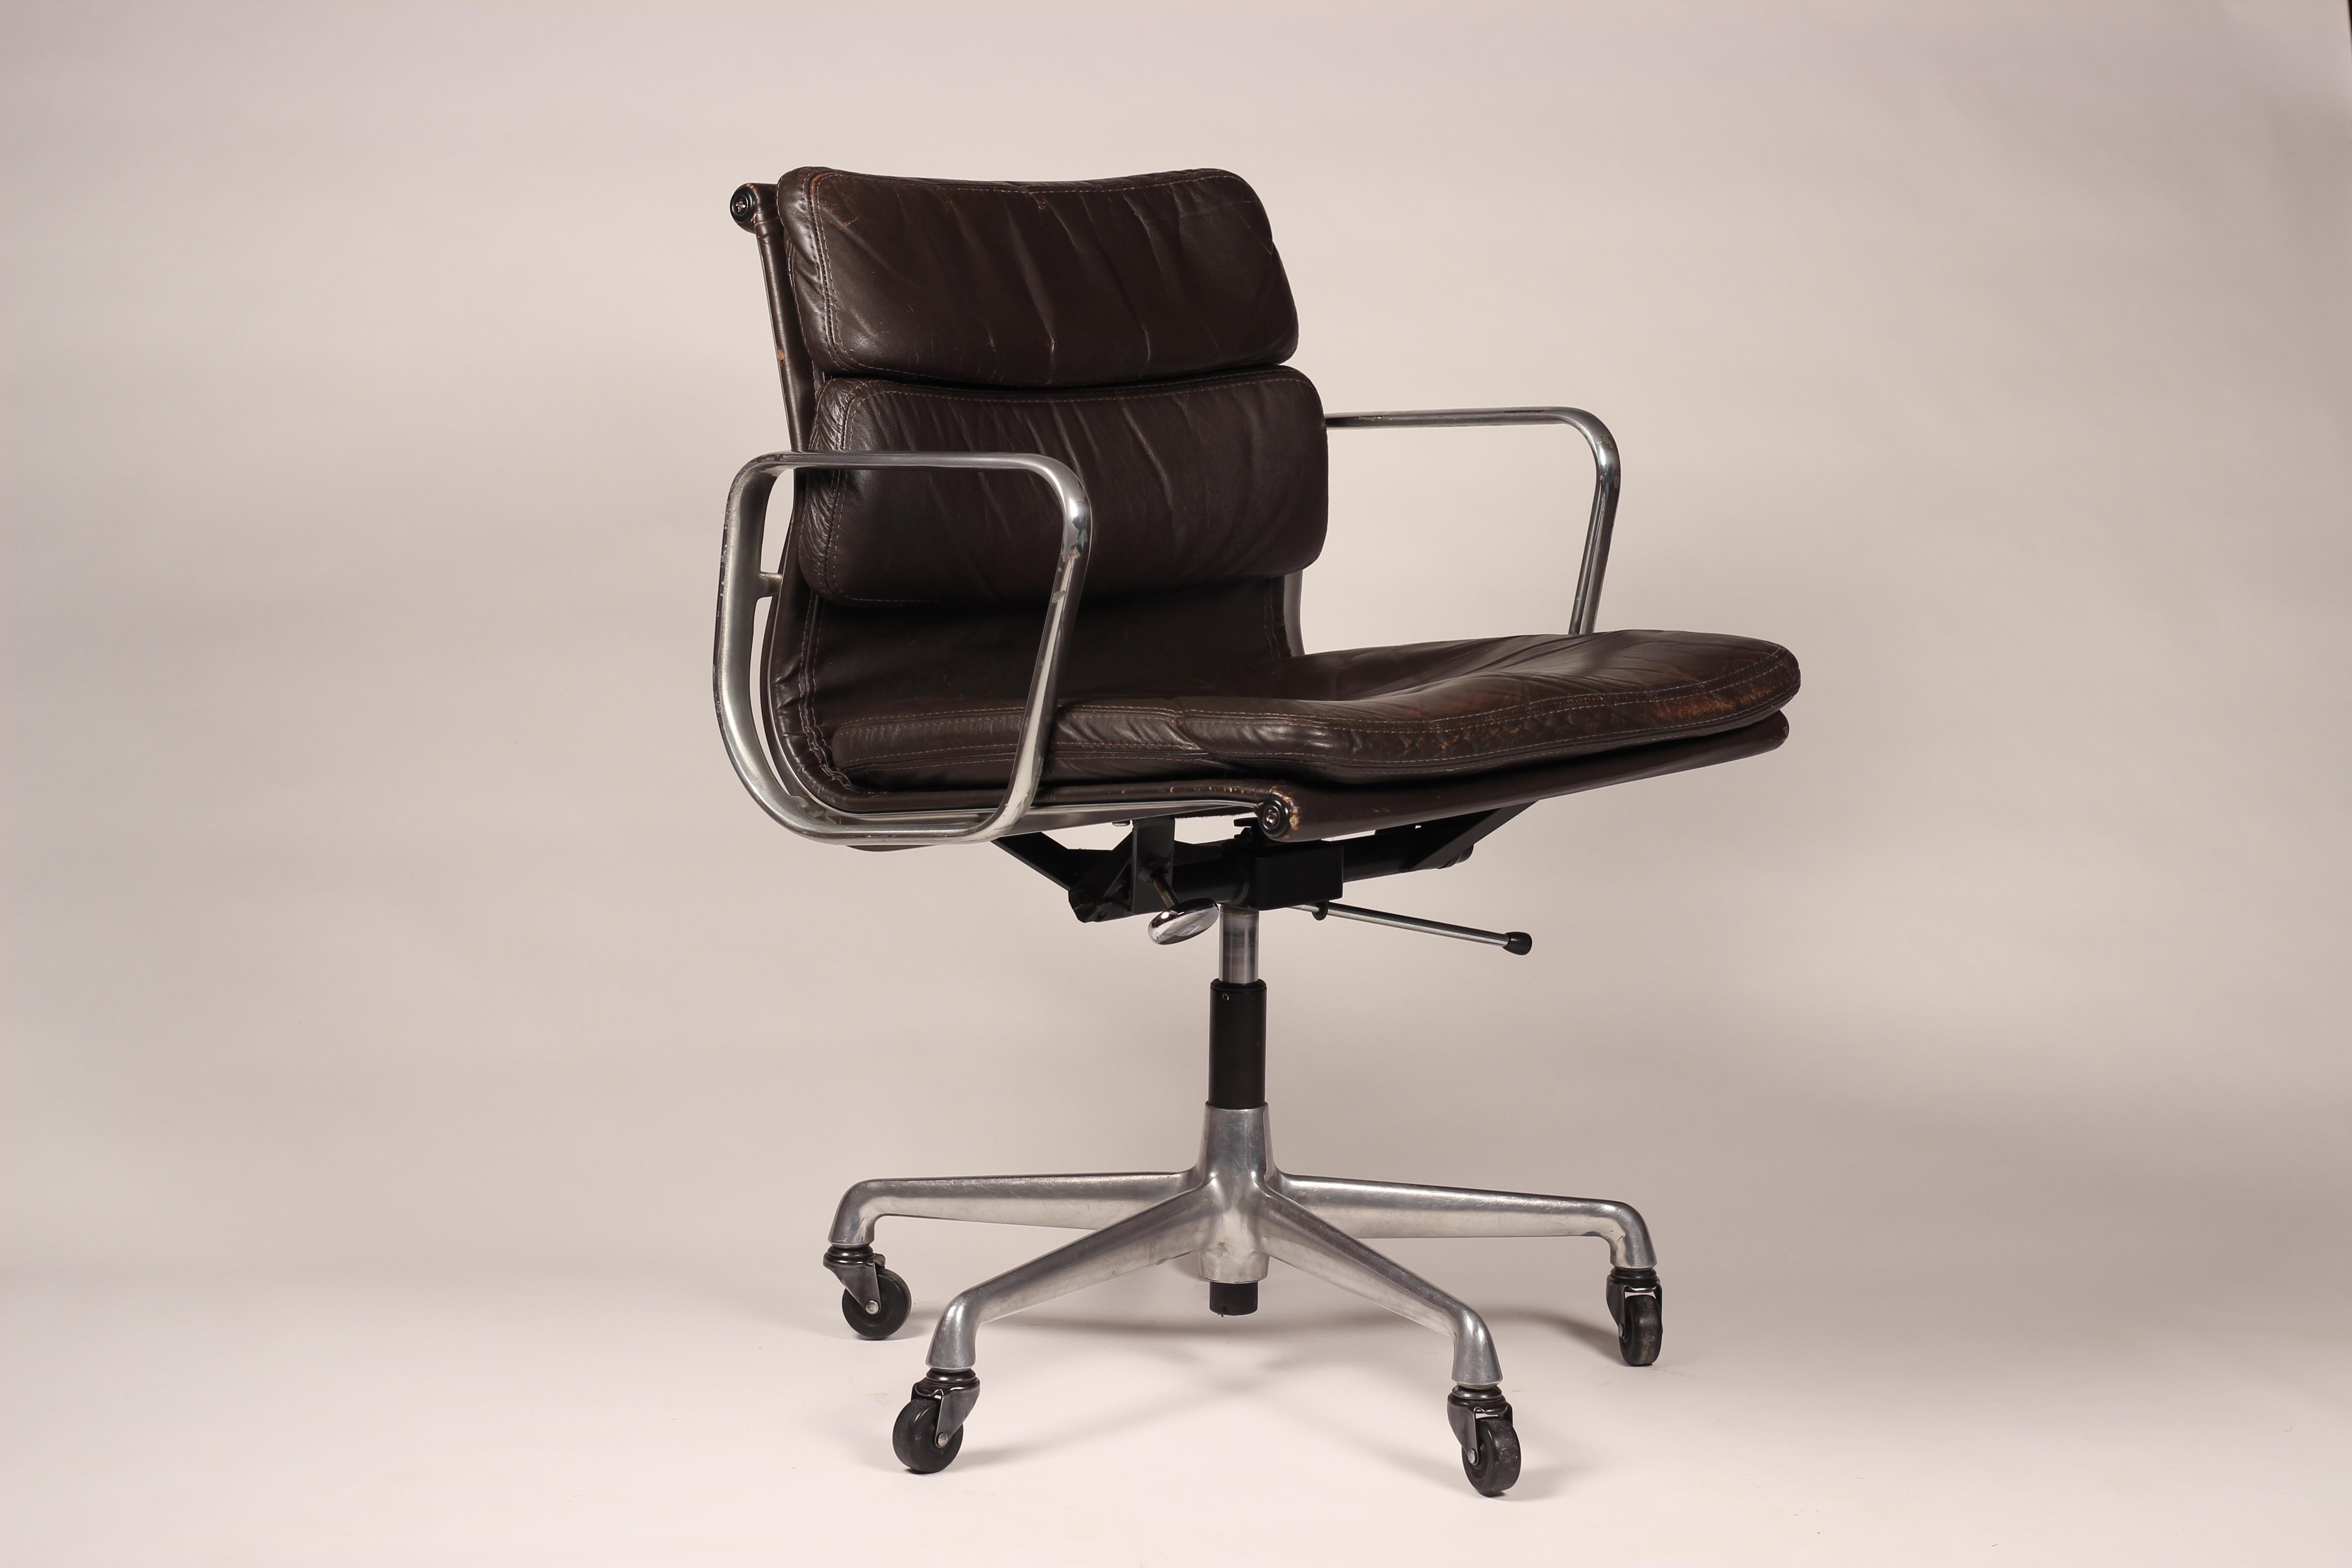 American Mid Century Modern Eames Soft Pad chair model EA 435 by Herman Miller